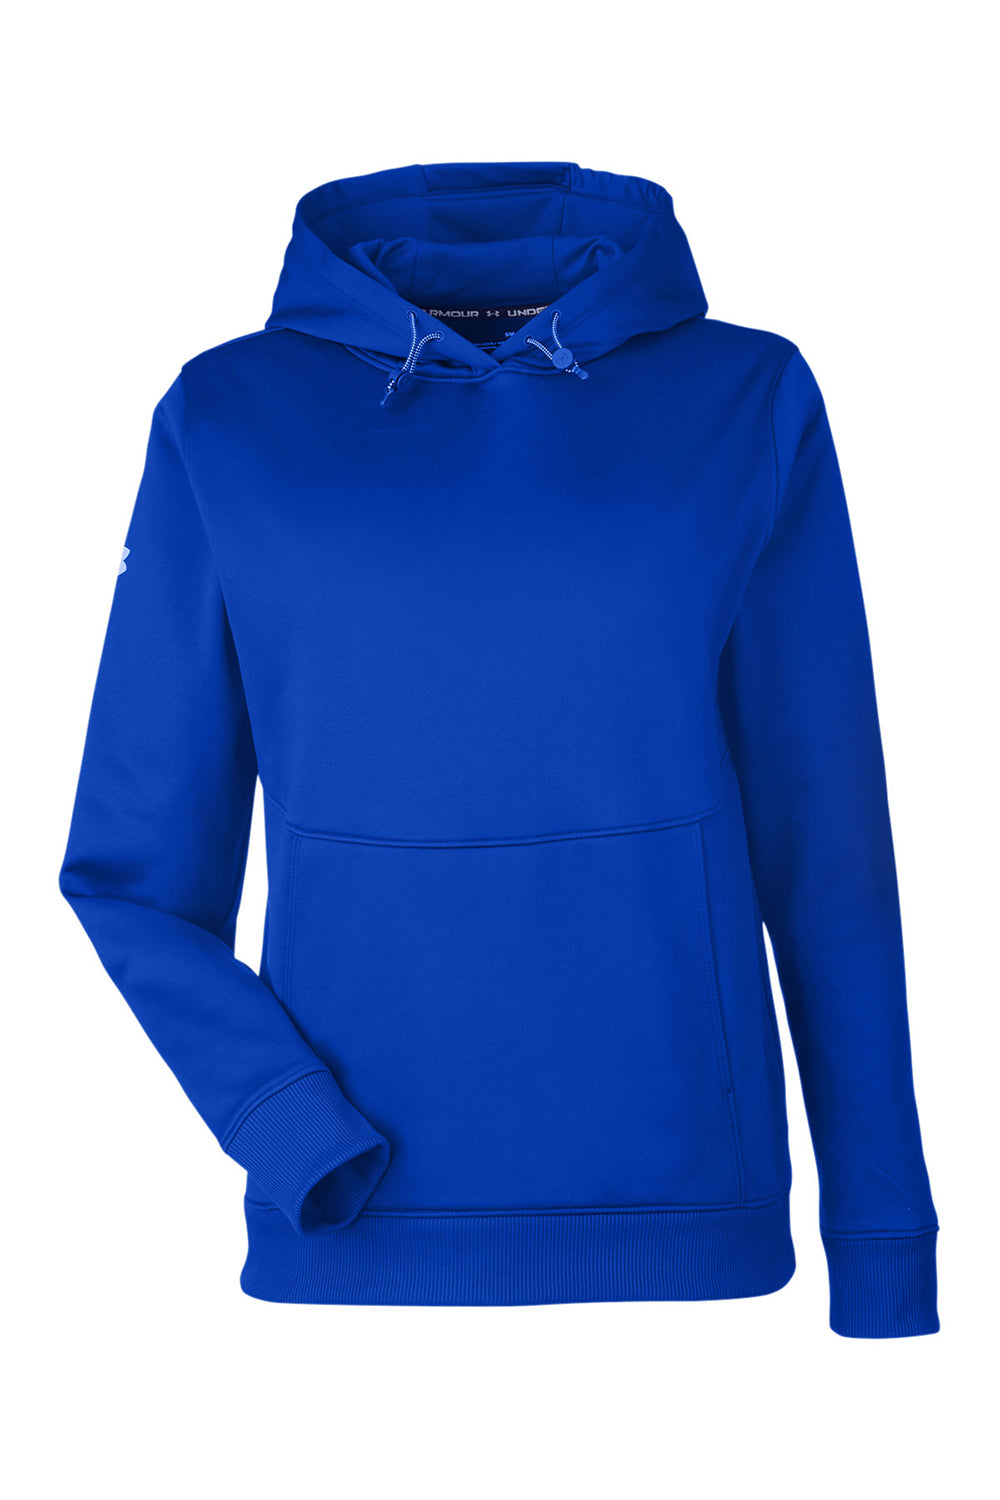 Under Armour 1370425 Womens Storm Armourfleece Water Resistant Hooded Sweatshirt Hoodie Royal Blue Flat Front